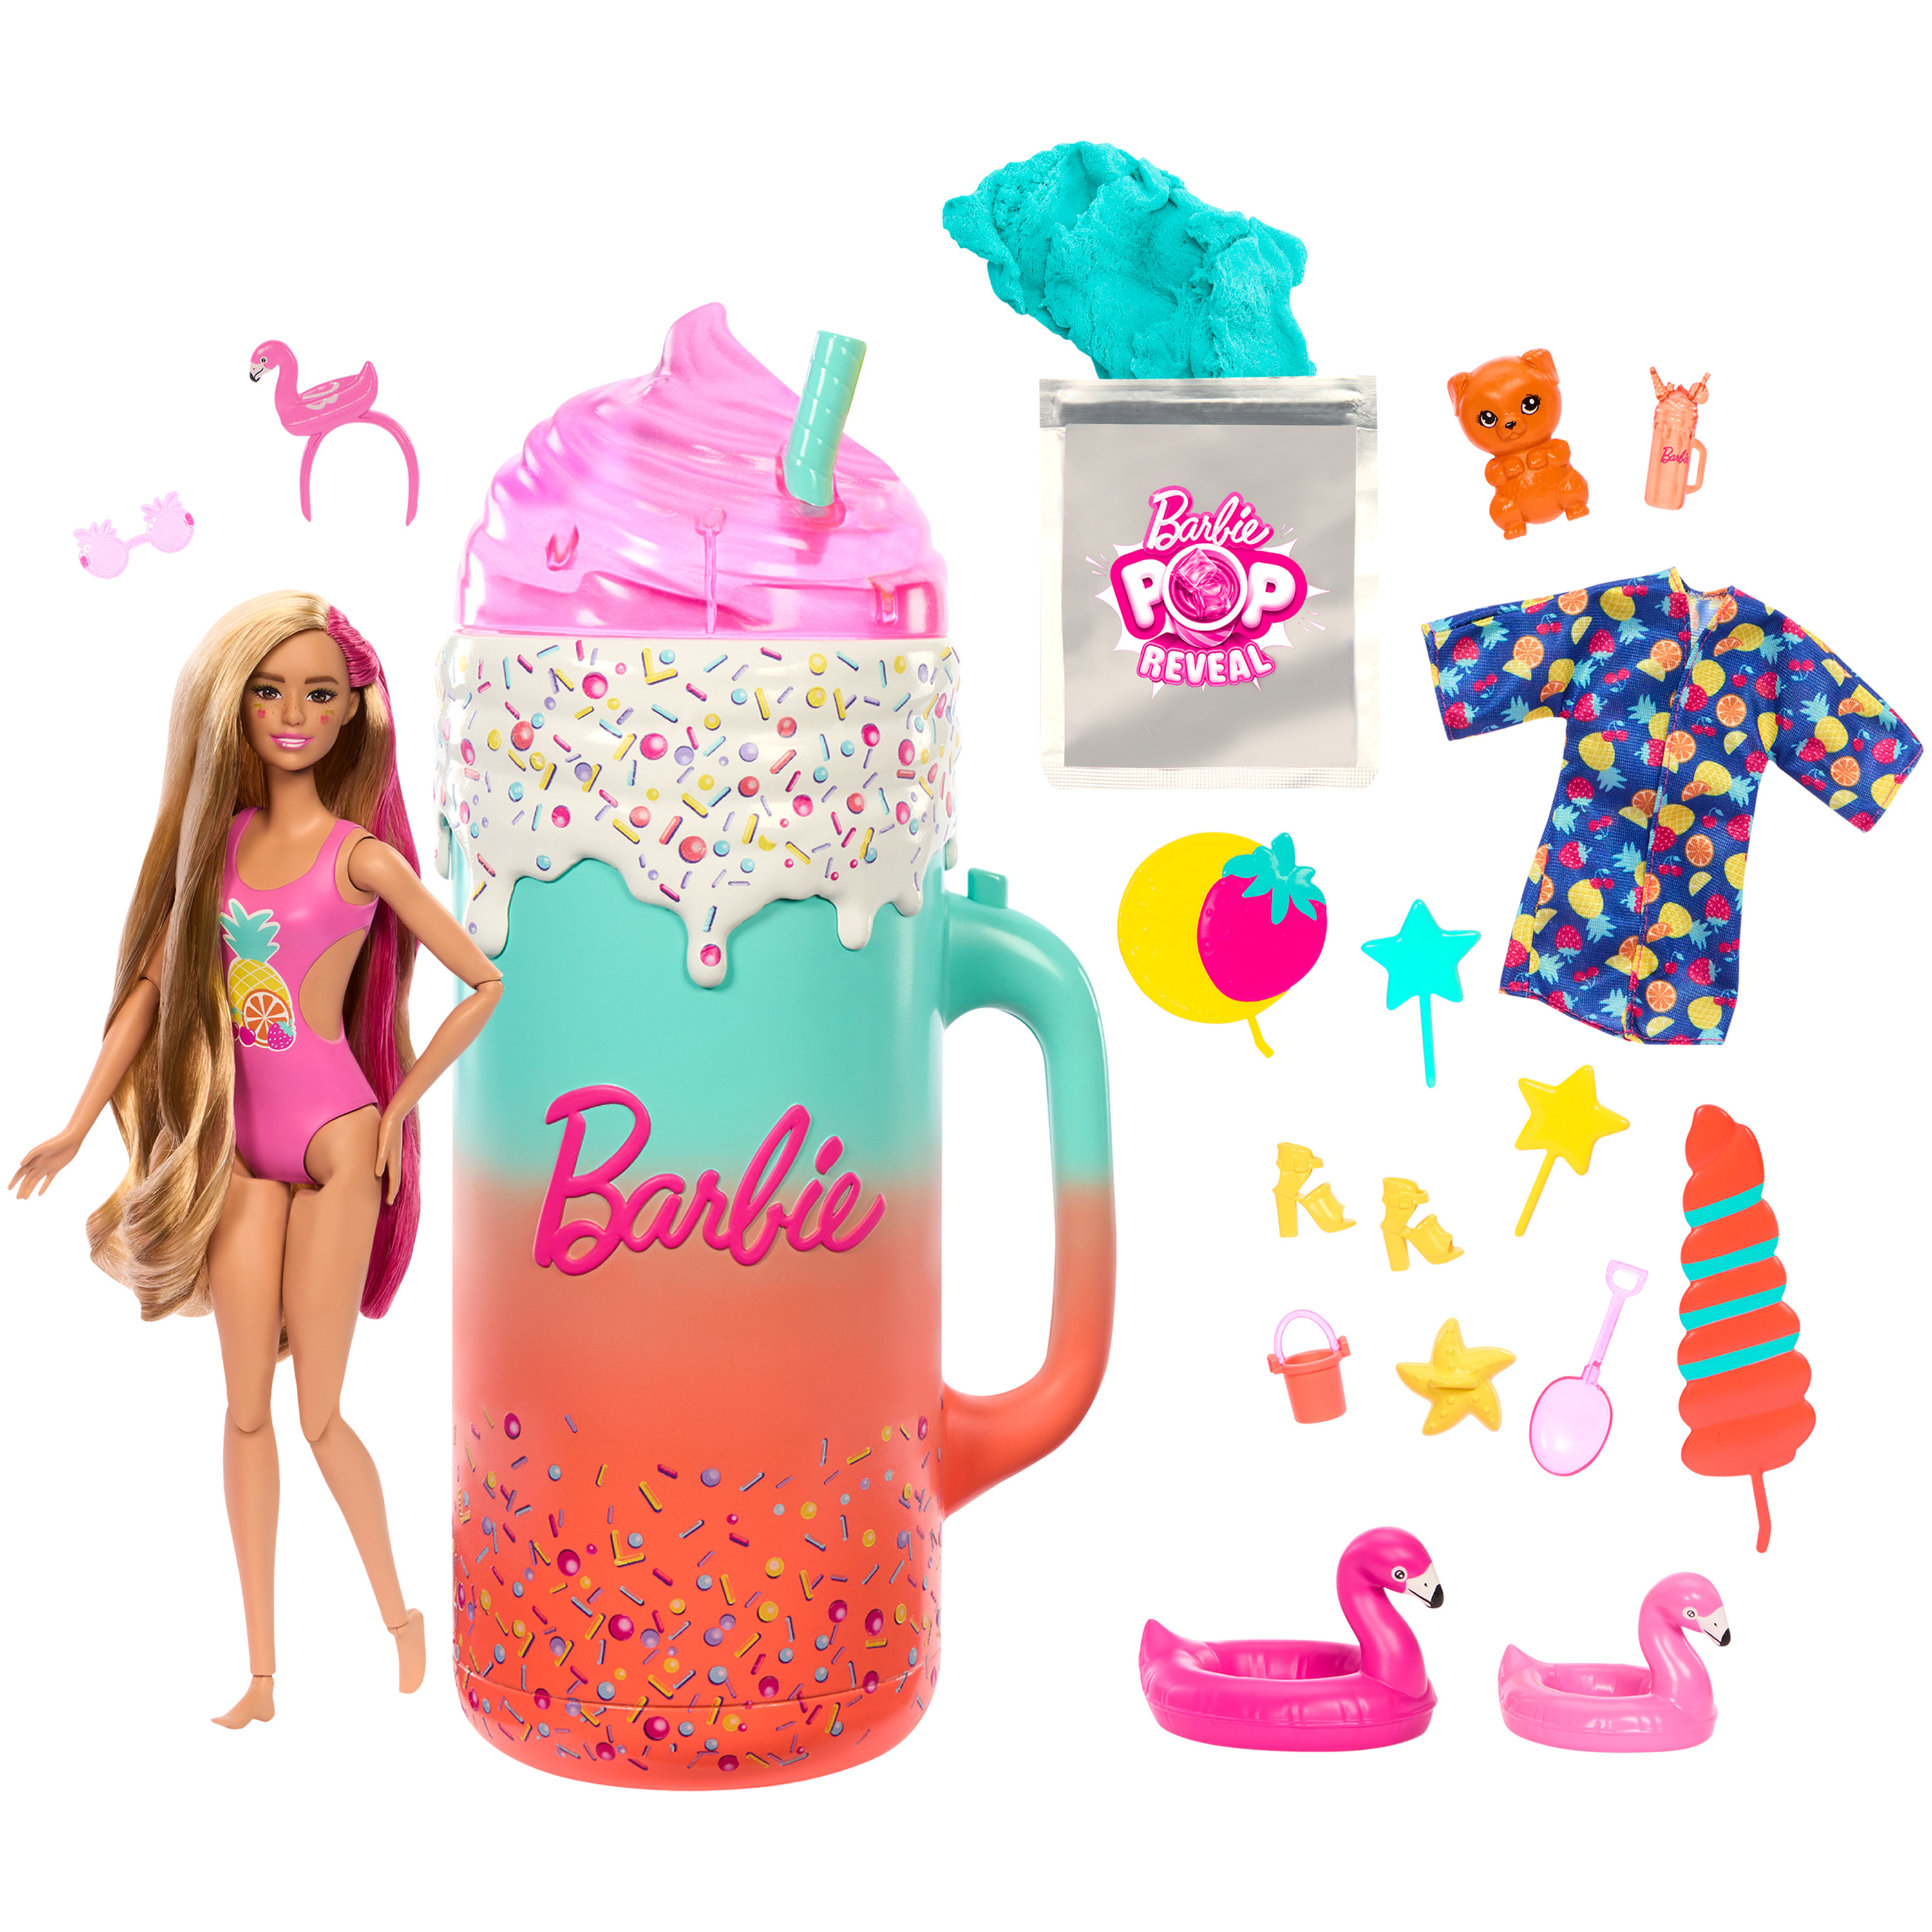 barbie pop reveal frutas smoothie (mattel - hrk57)